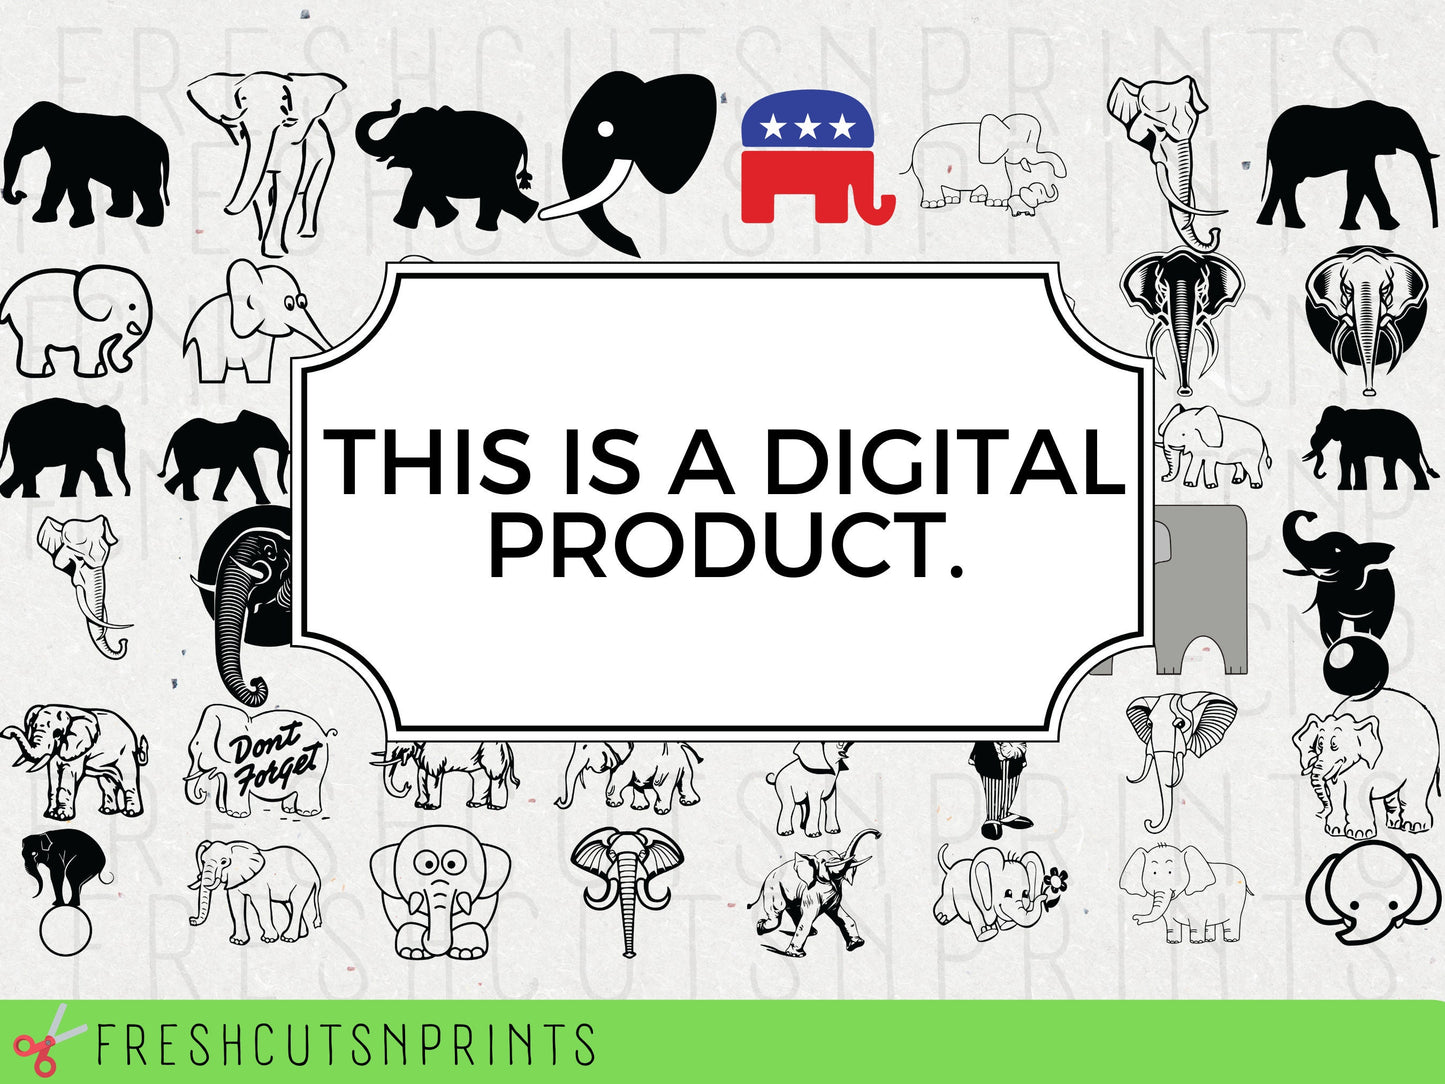 50+ Elephant SVG Bundle , Elephant Silhouette, Elephant Clipart, Elephant Vector, Baby Elephant svg, Elephant cut file, Cute elephant svg